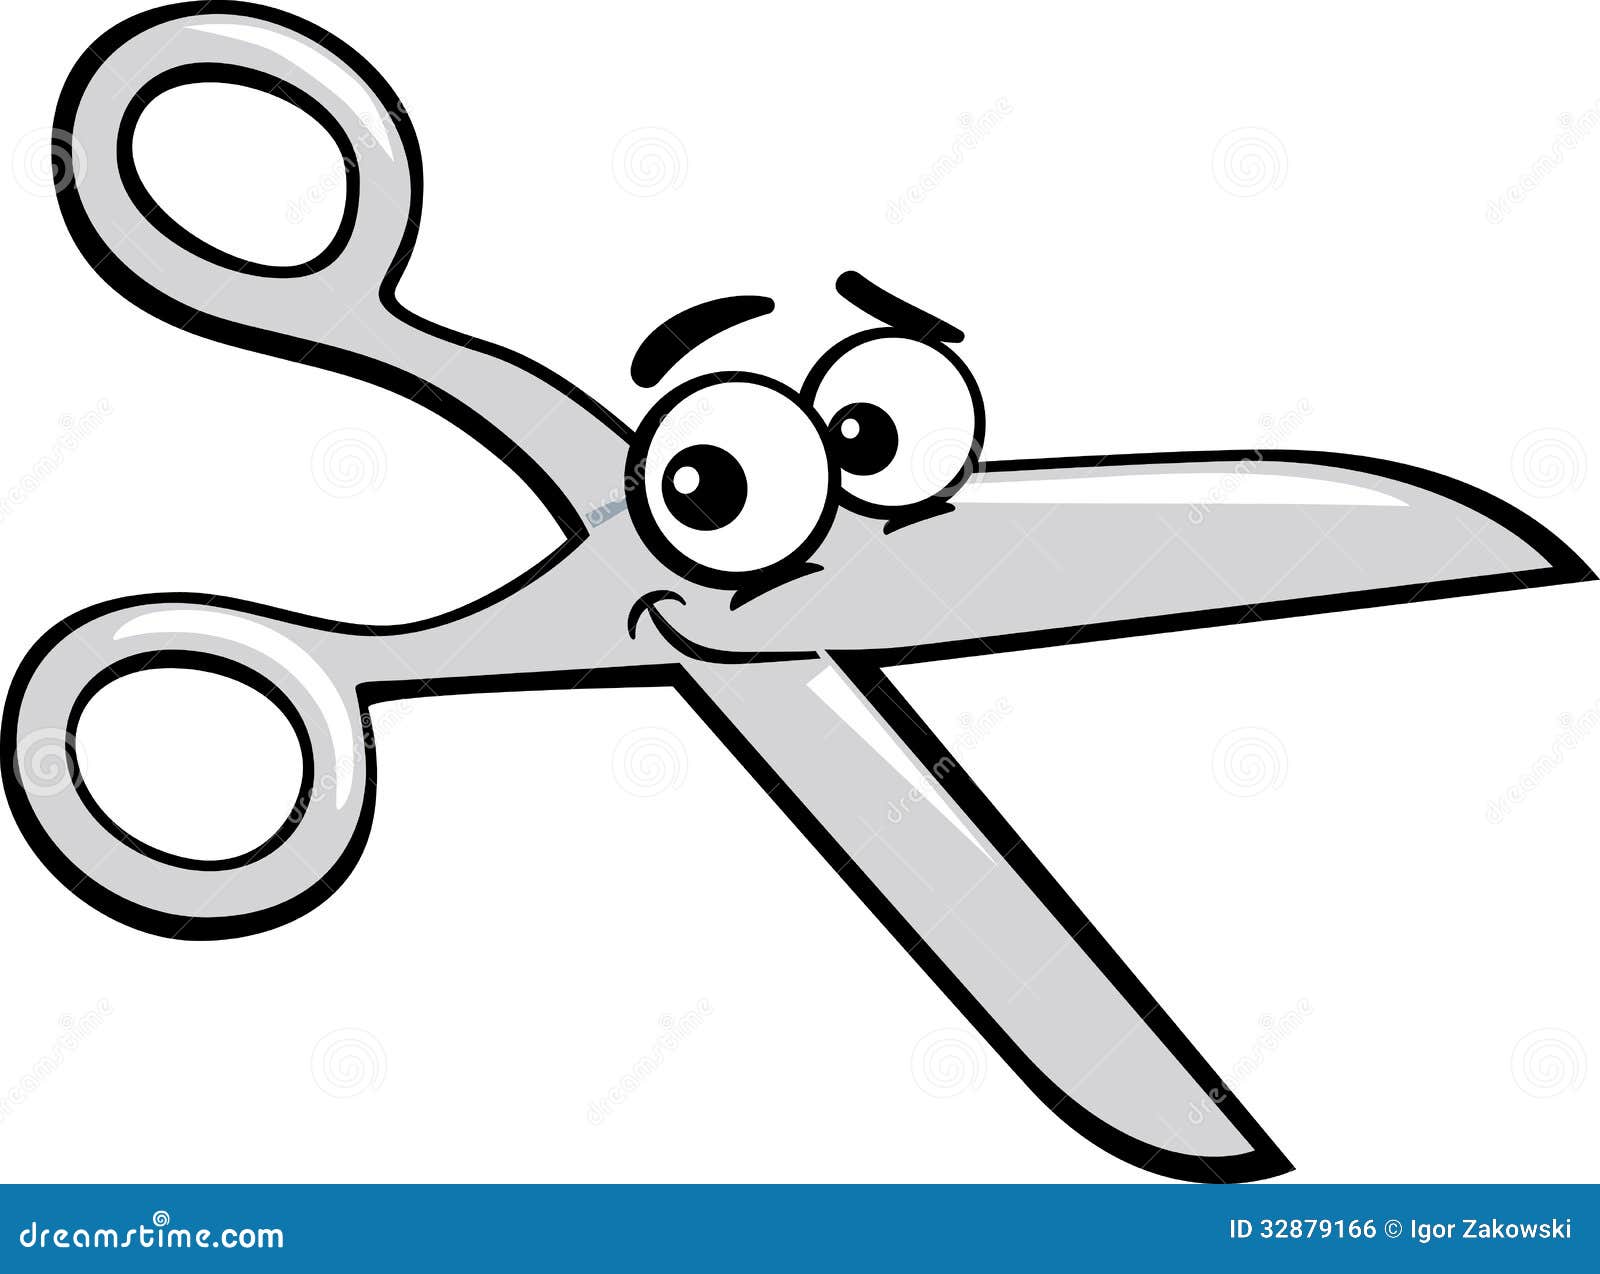 scissors clip art cartoon 